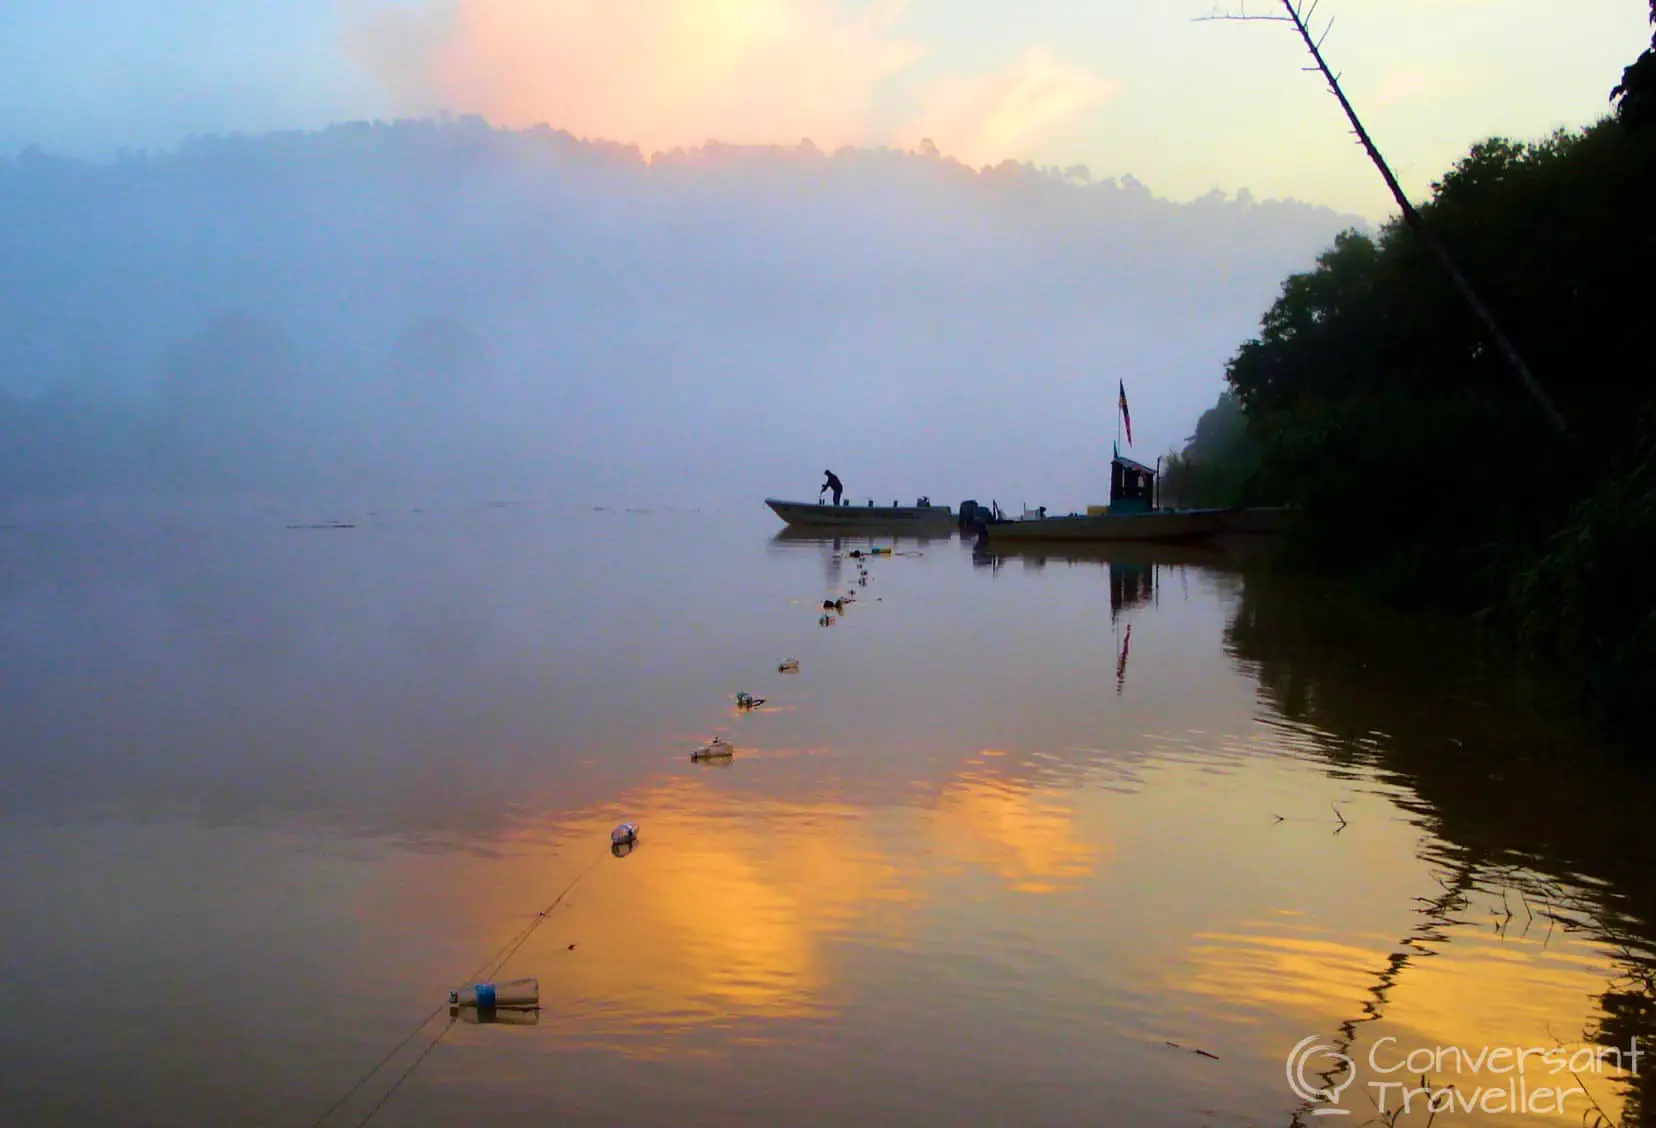 Dawn rises at Kinabatangan, Borneo